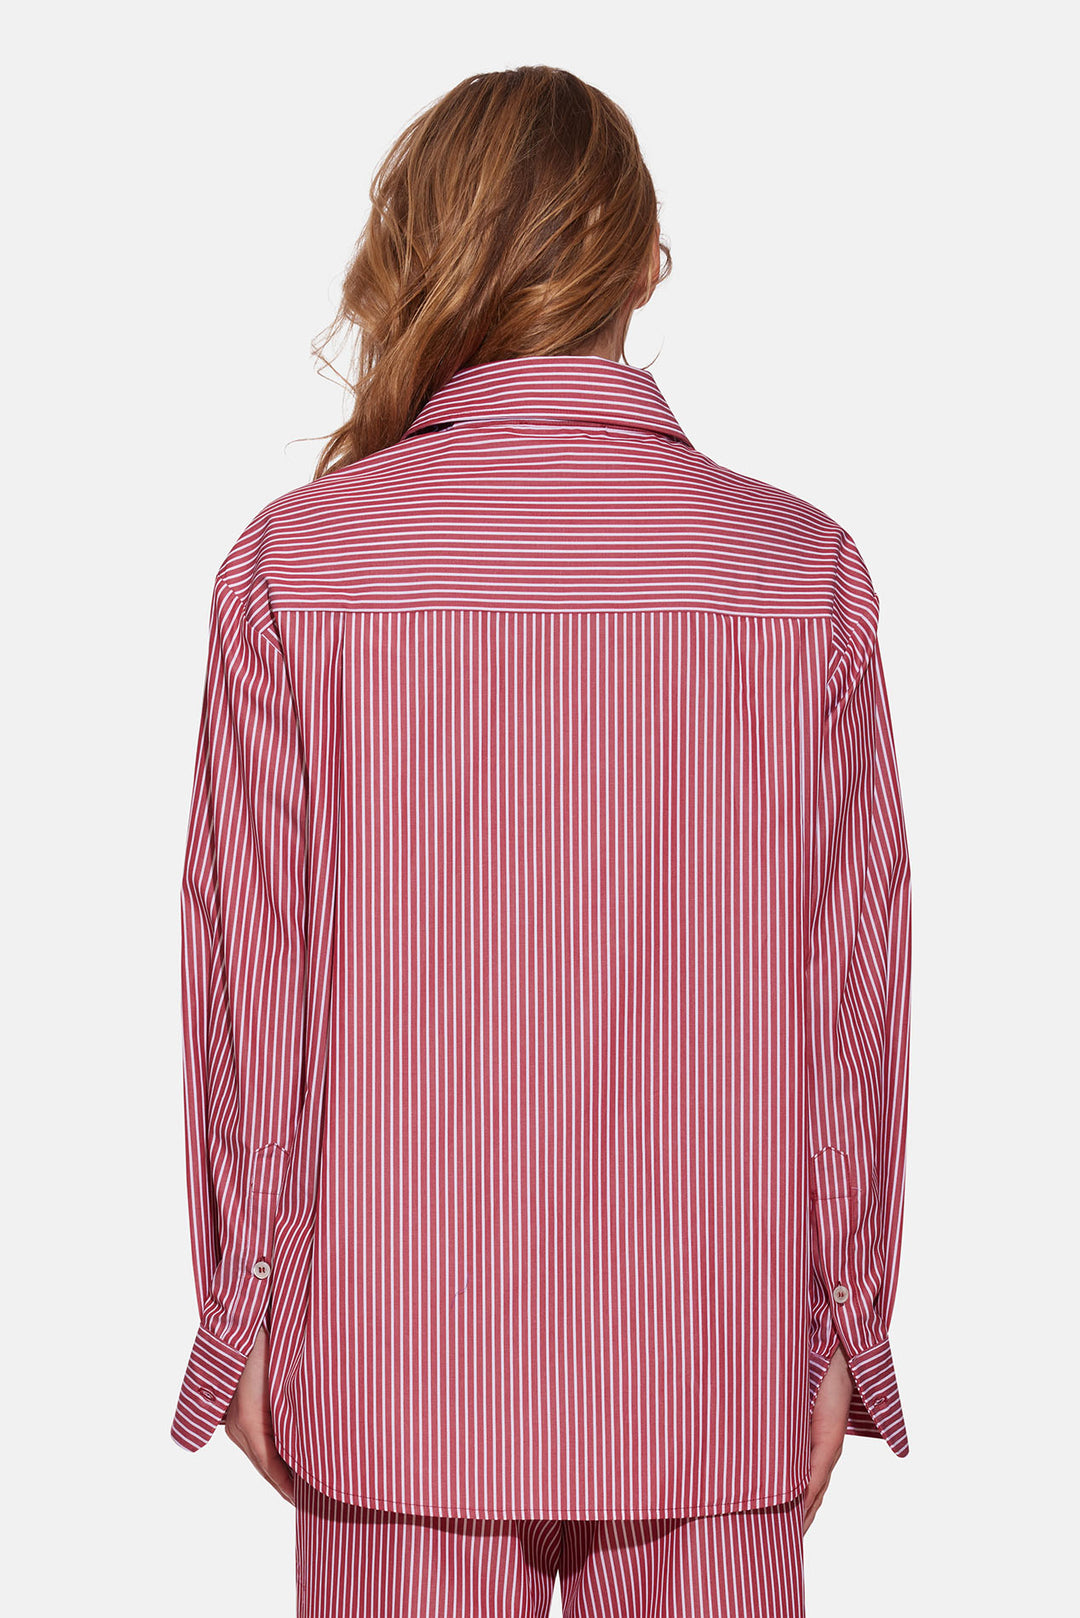 Lily Poplin Boyfriend Shirt Red/White Stripe